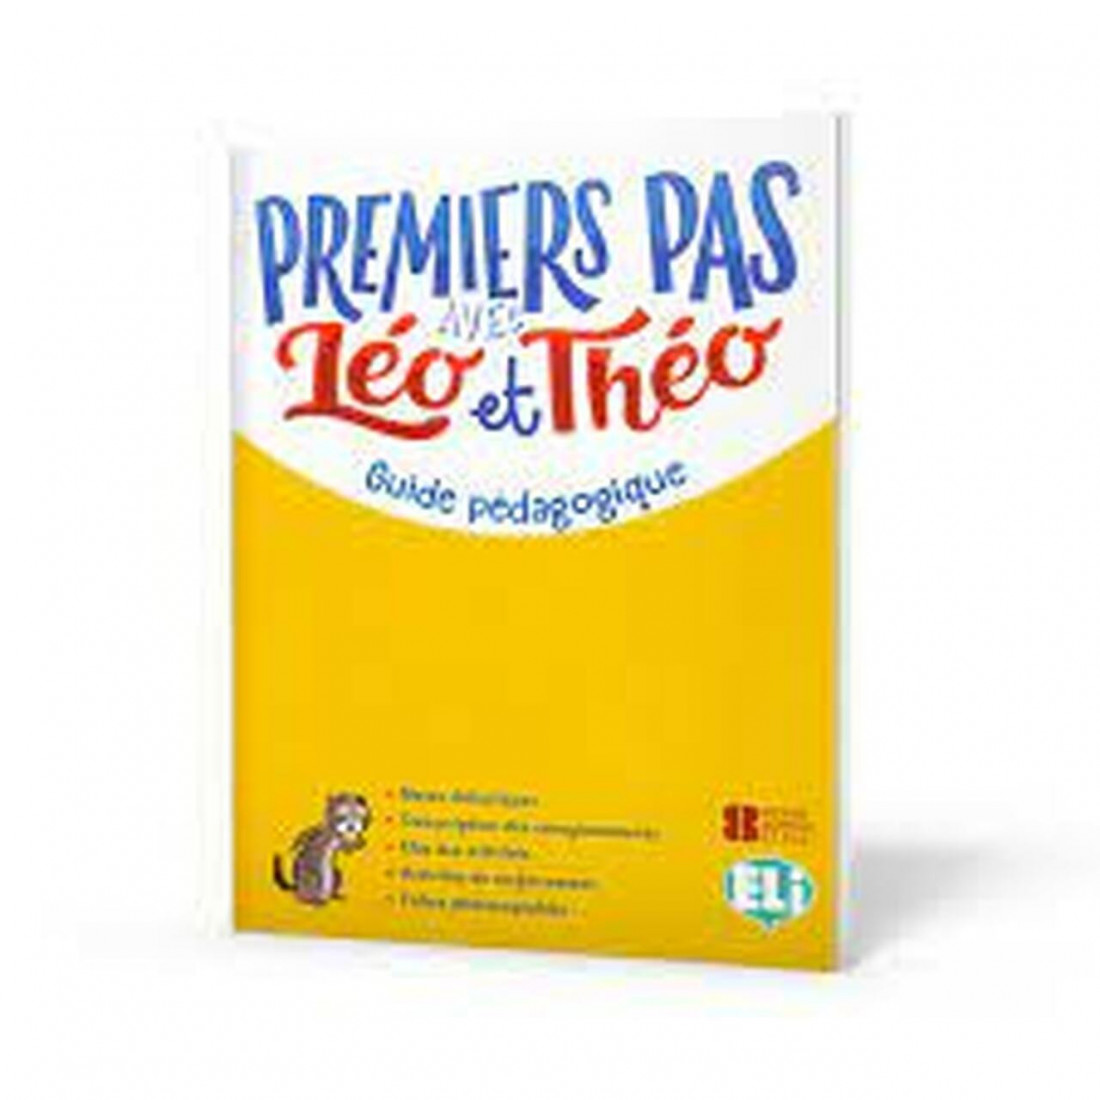 PREMIERS PAS AVEC LEO ET THEO - STARTER LEVEL - TEACHERS BOOK + AUDIO CD